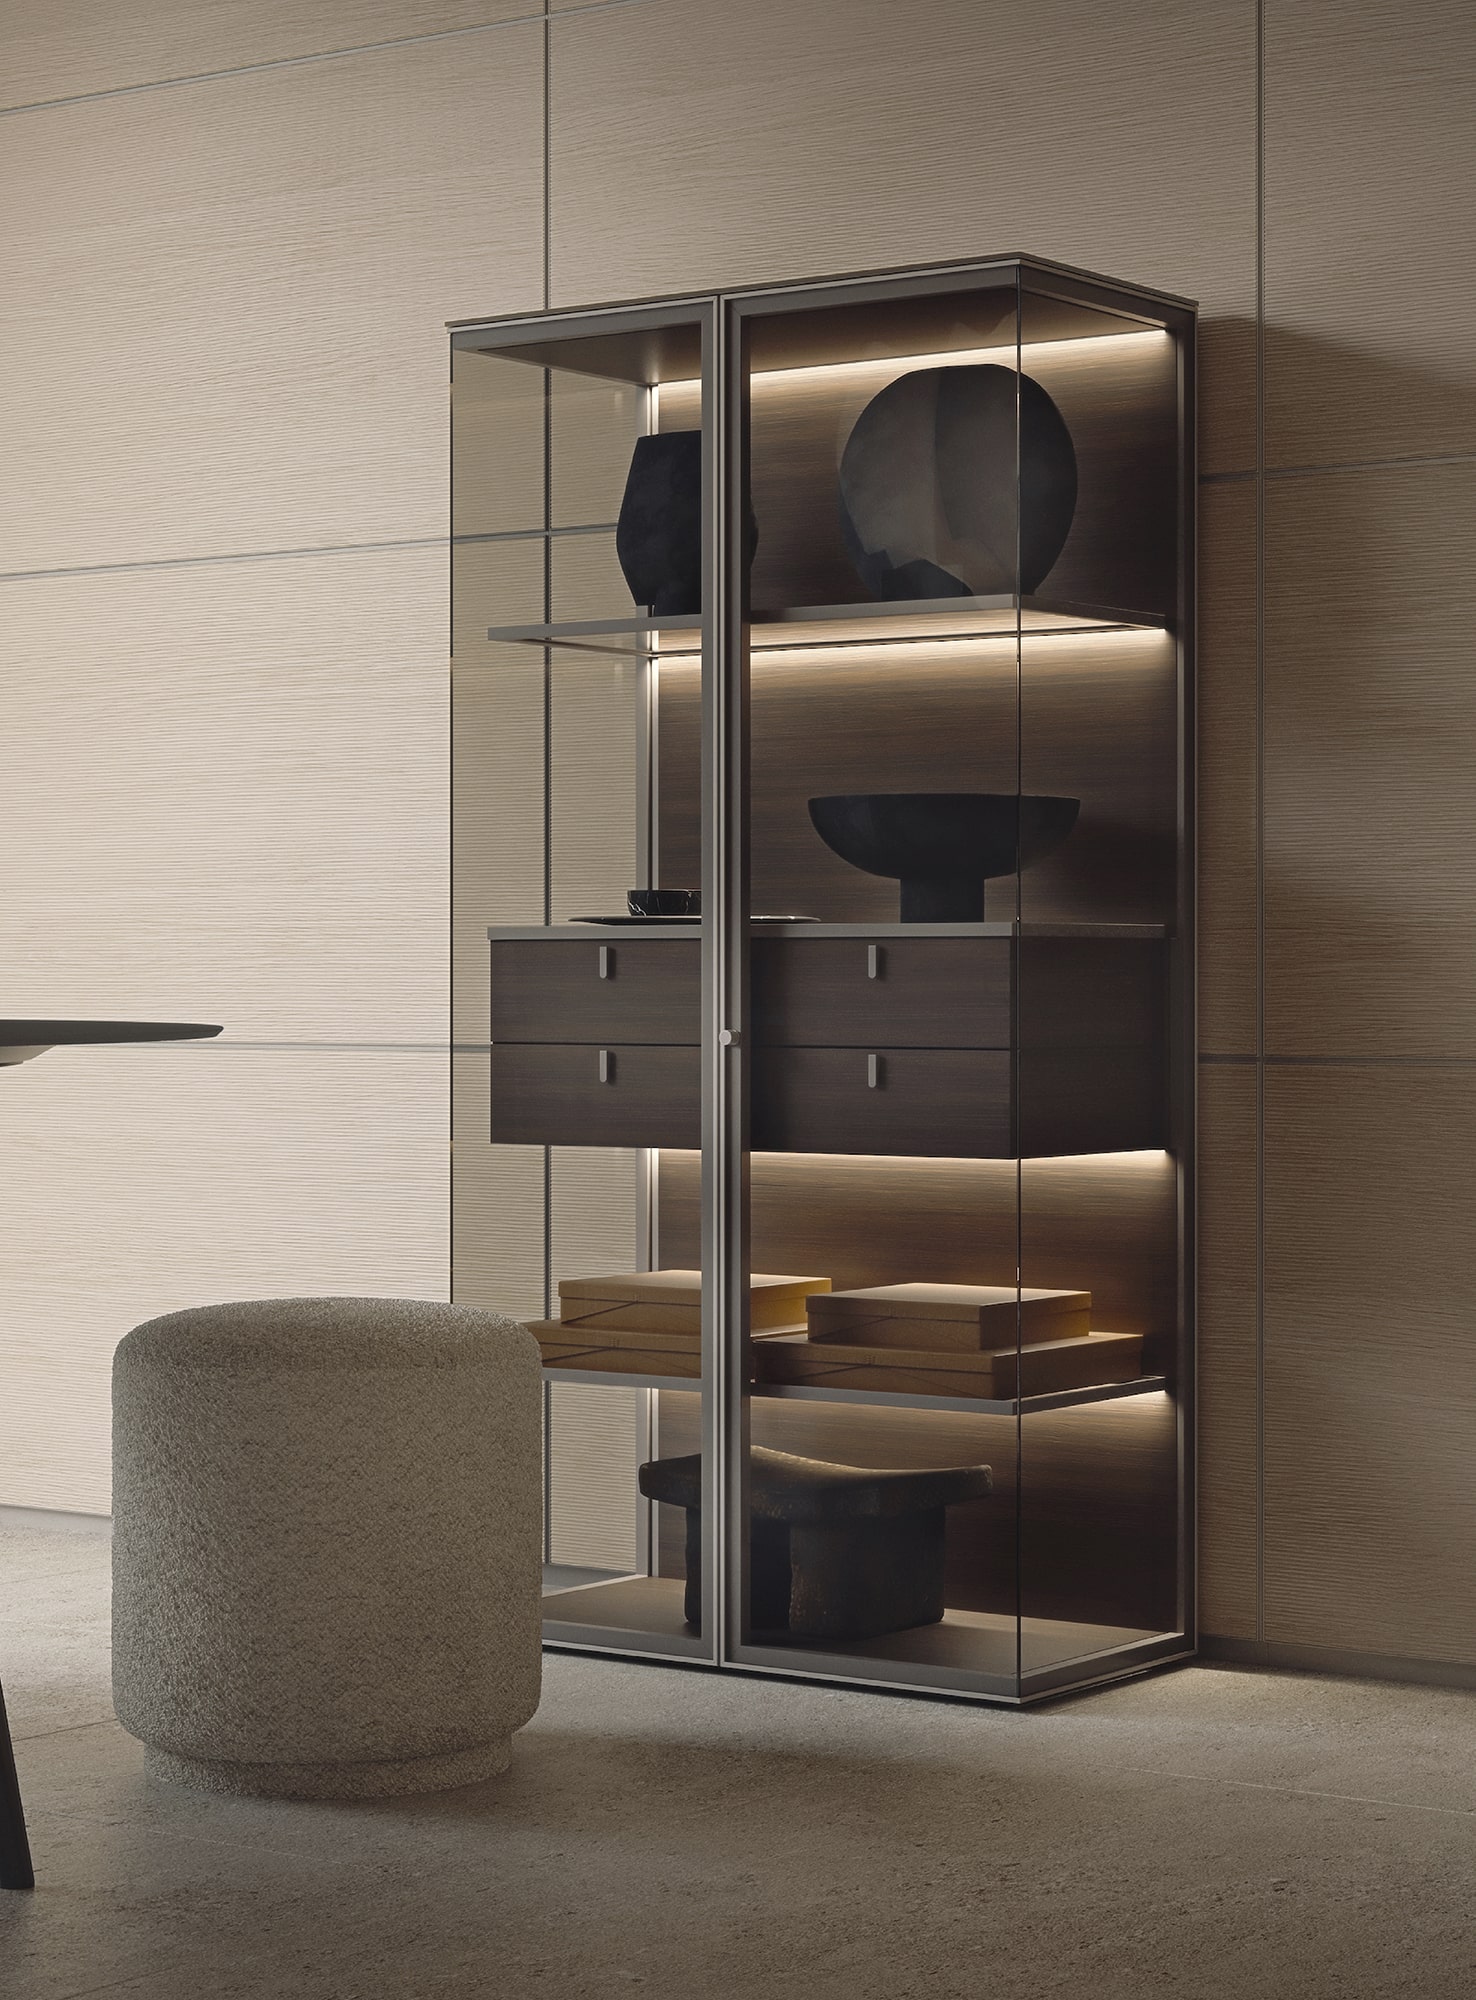 Aliante is a new glazed wardrobe for the living room designed by Giuseppe Bavuso